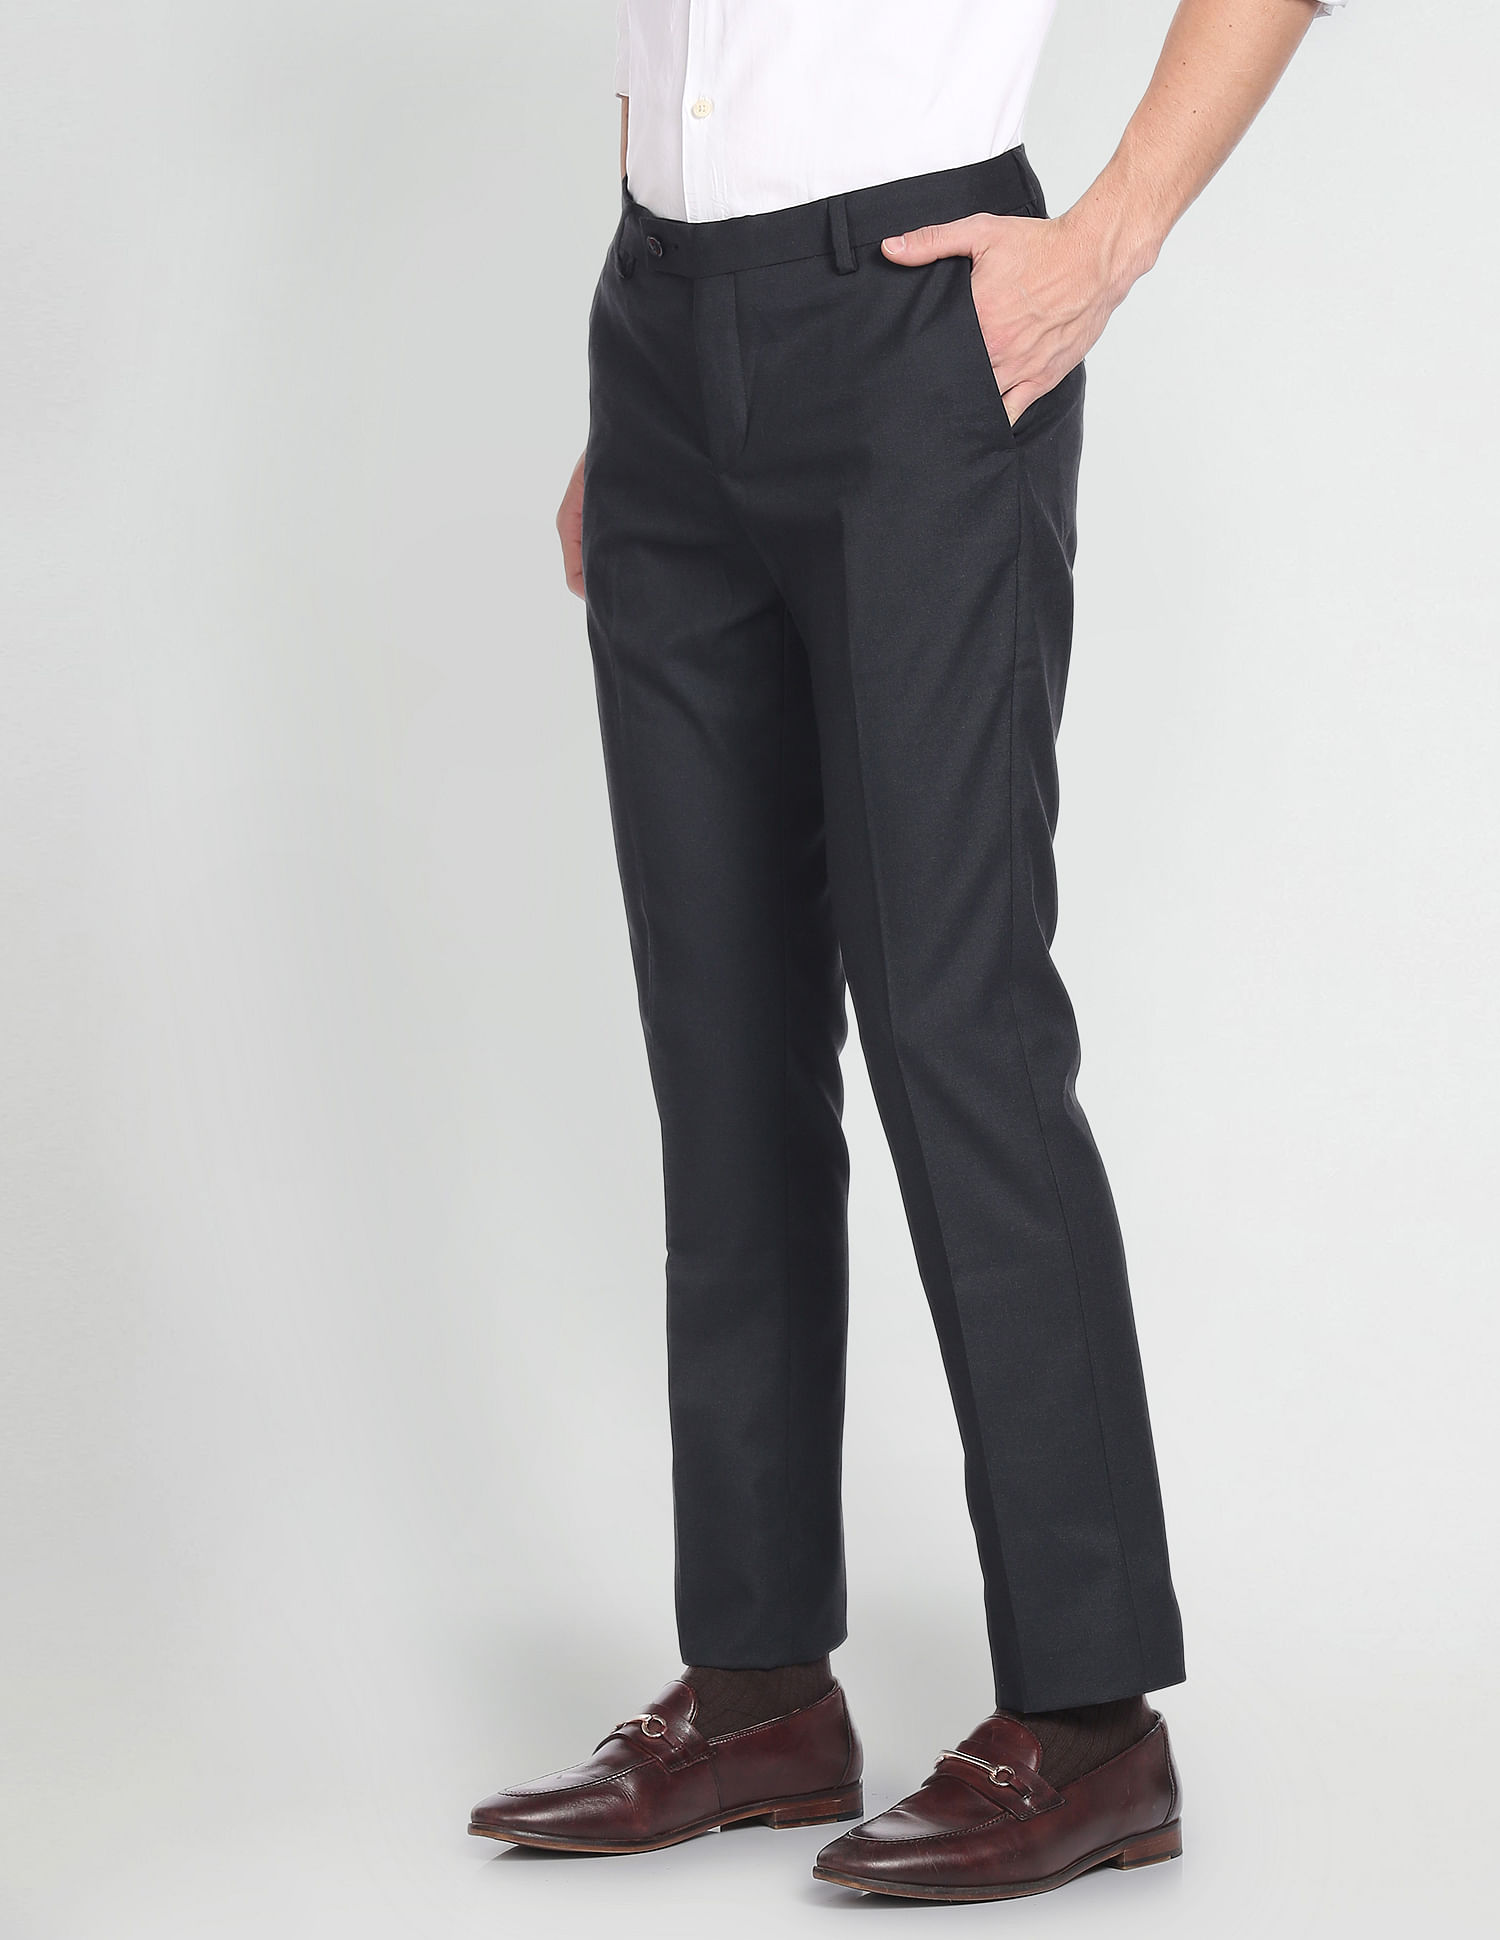 Buy Navy Formal Trousers Online in India at Best Price - Westside